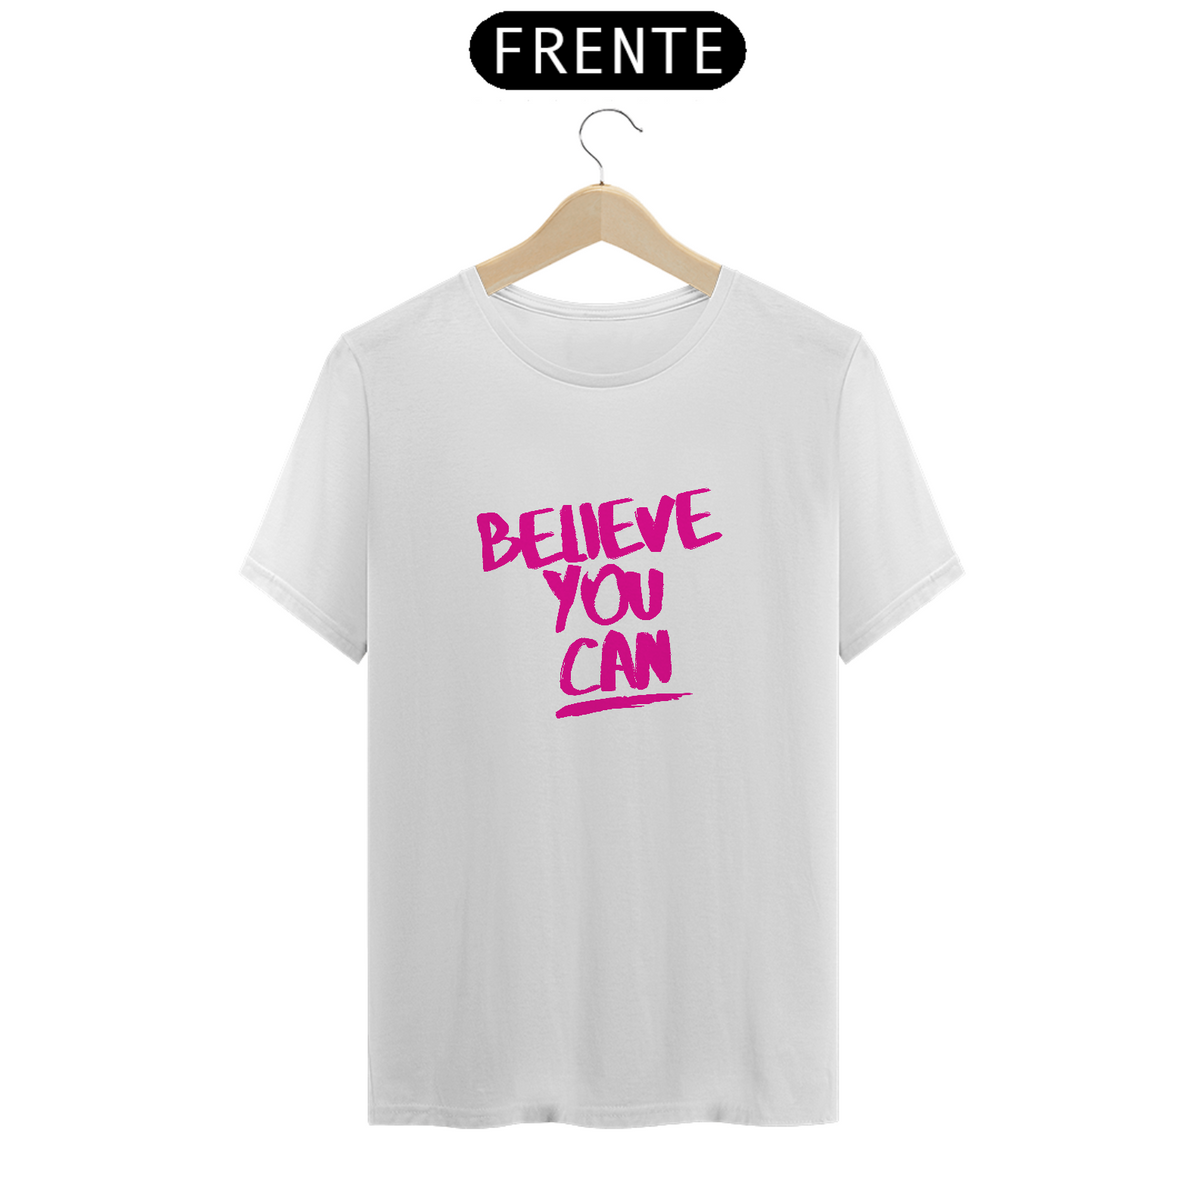 Nome do produto: Camiseta Believe you can